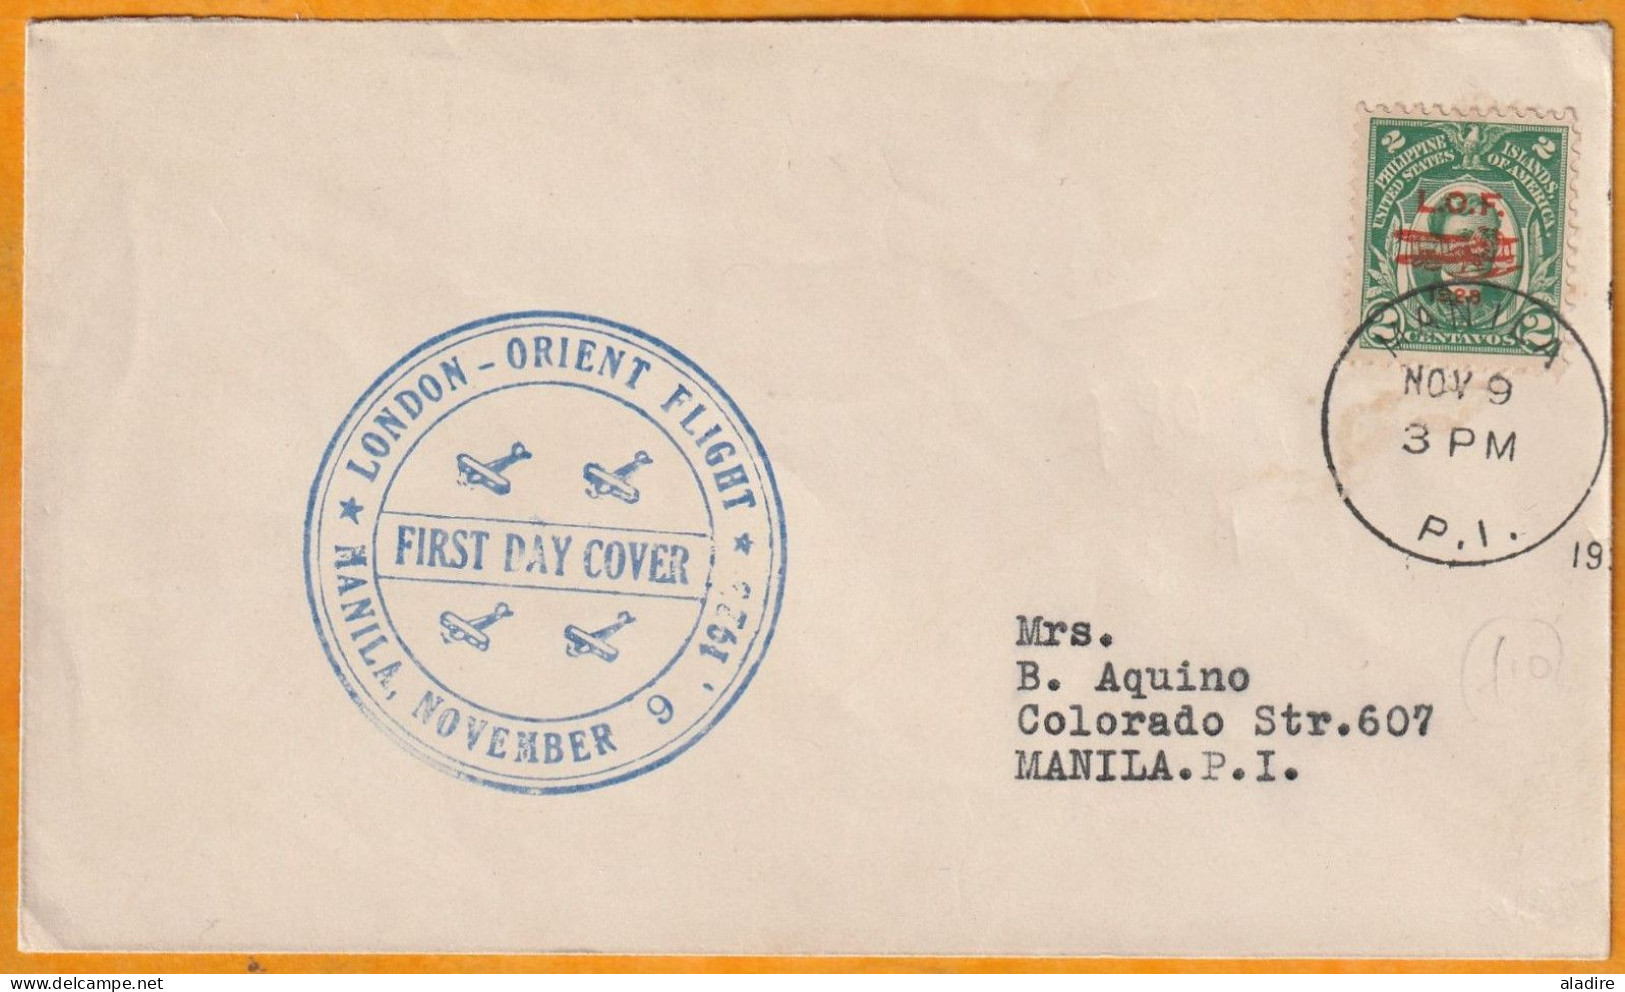 1928 - FDC - London Orient Precursor Flight - Manila (USA) November 9th 1928 - 2 C Stamp Air Mail LOF Overprint - Philippines